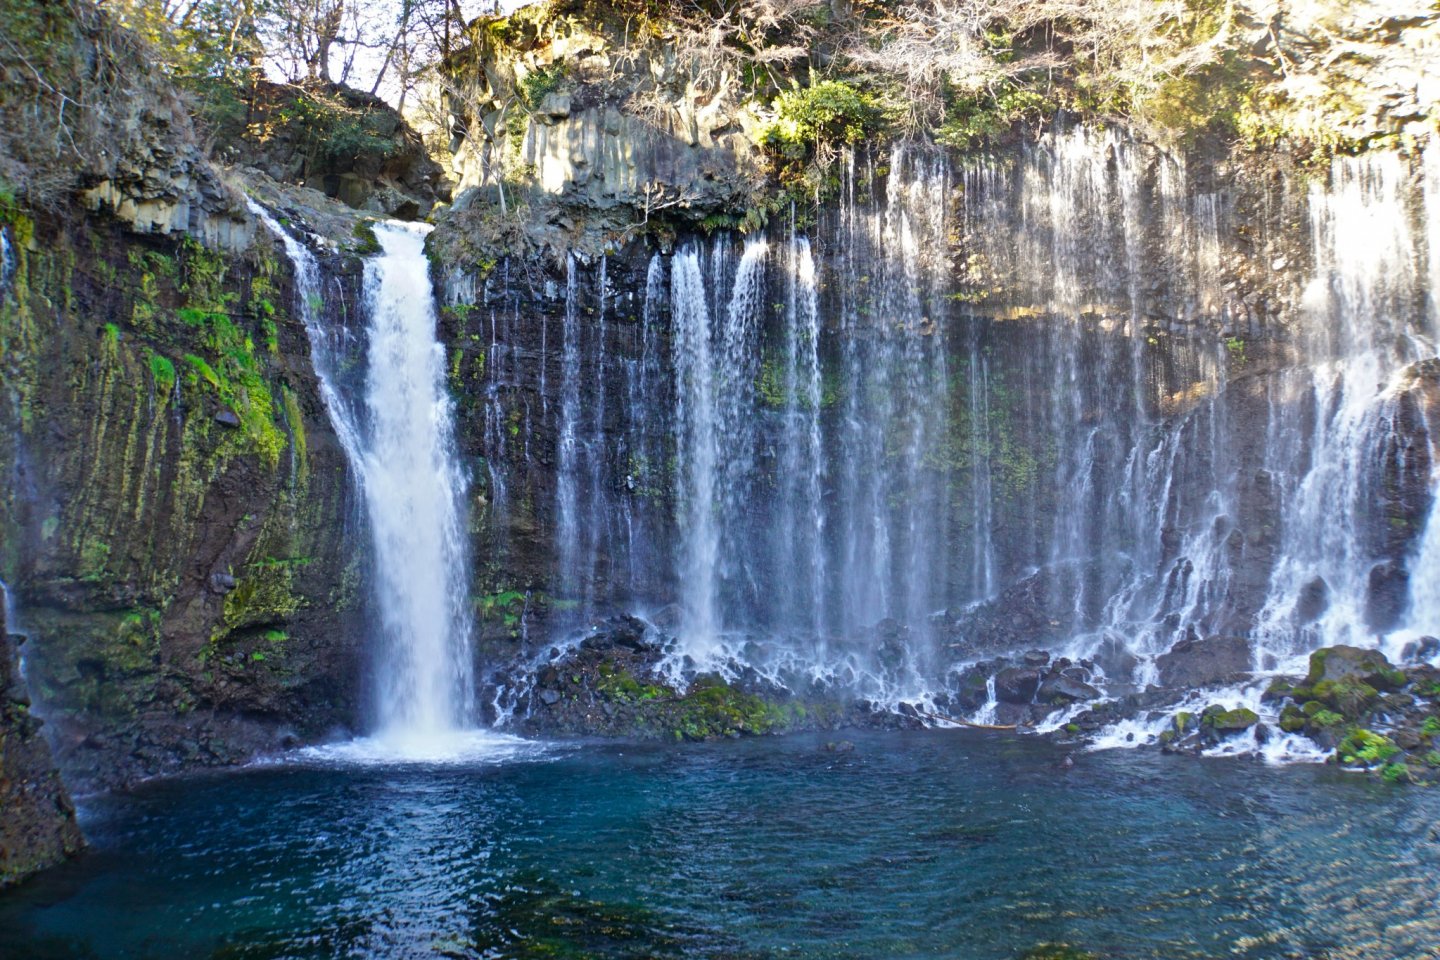 Shiraito no Taki, a curtain of threadlike waterfalls